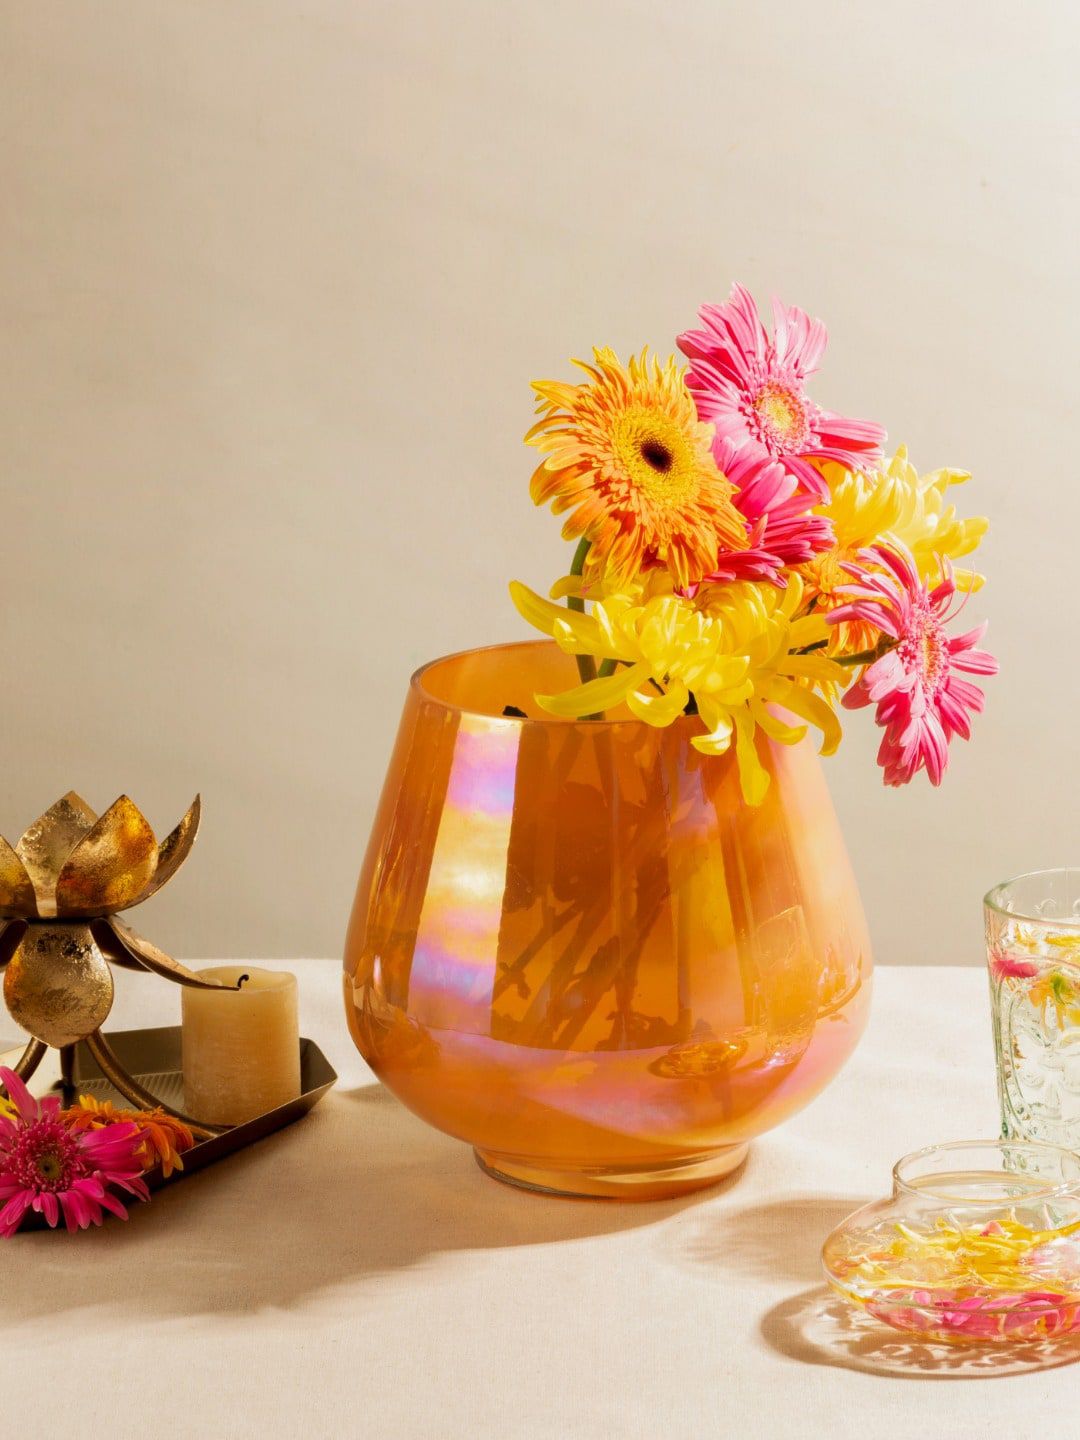 The 7 DeKor Solid Barle Glass Flower Vase Price in India